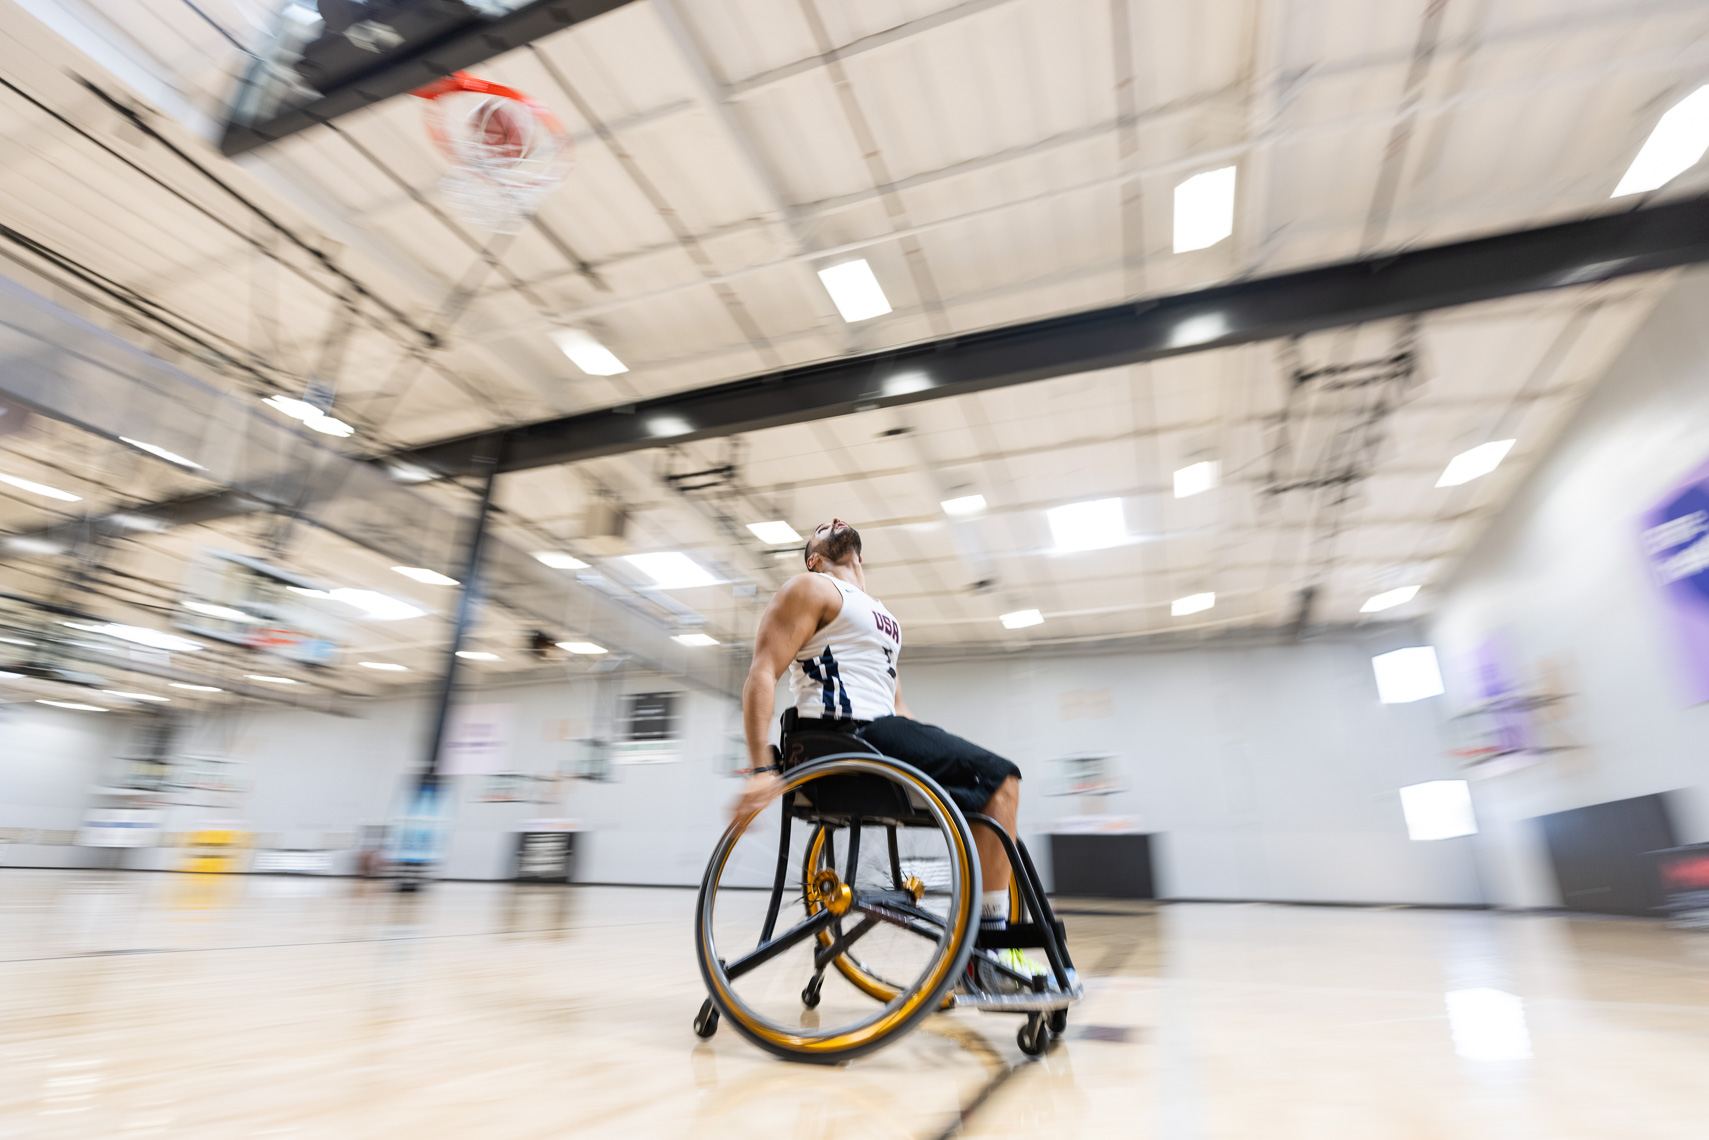 Portrait of Jorge Sanchez - Team USA - Paralympics Wheelchair Basketball